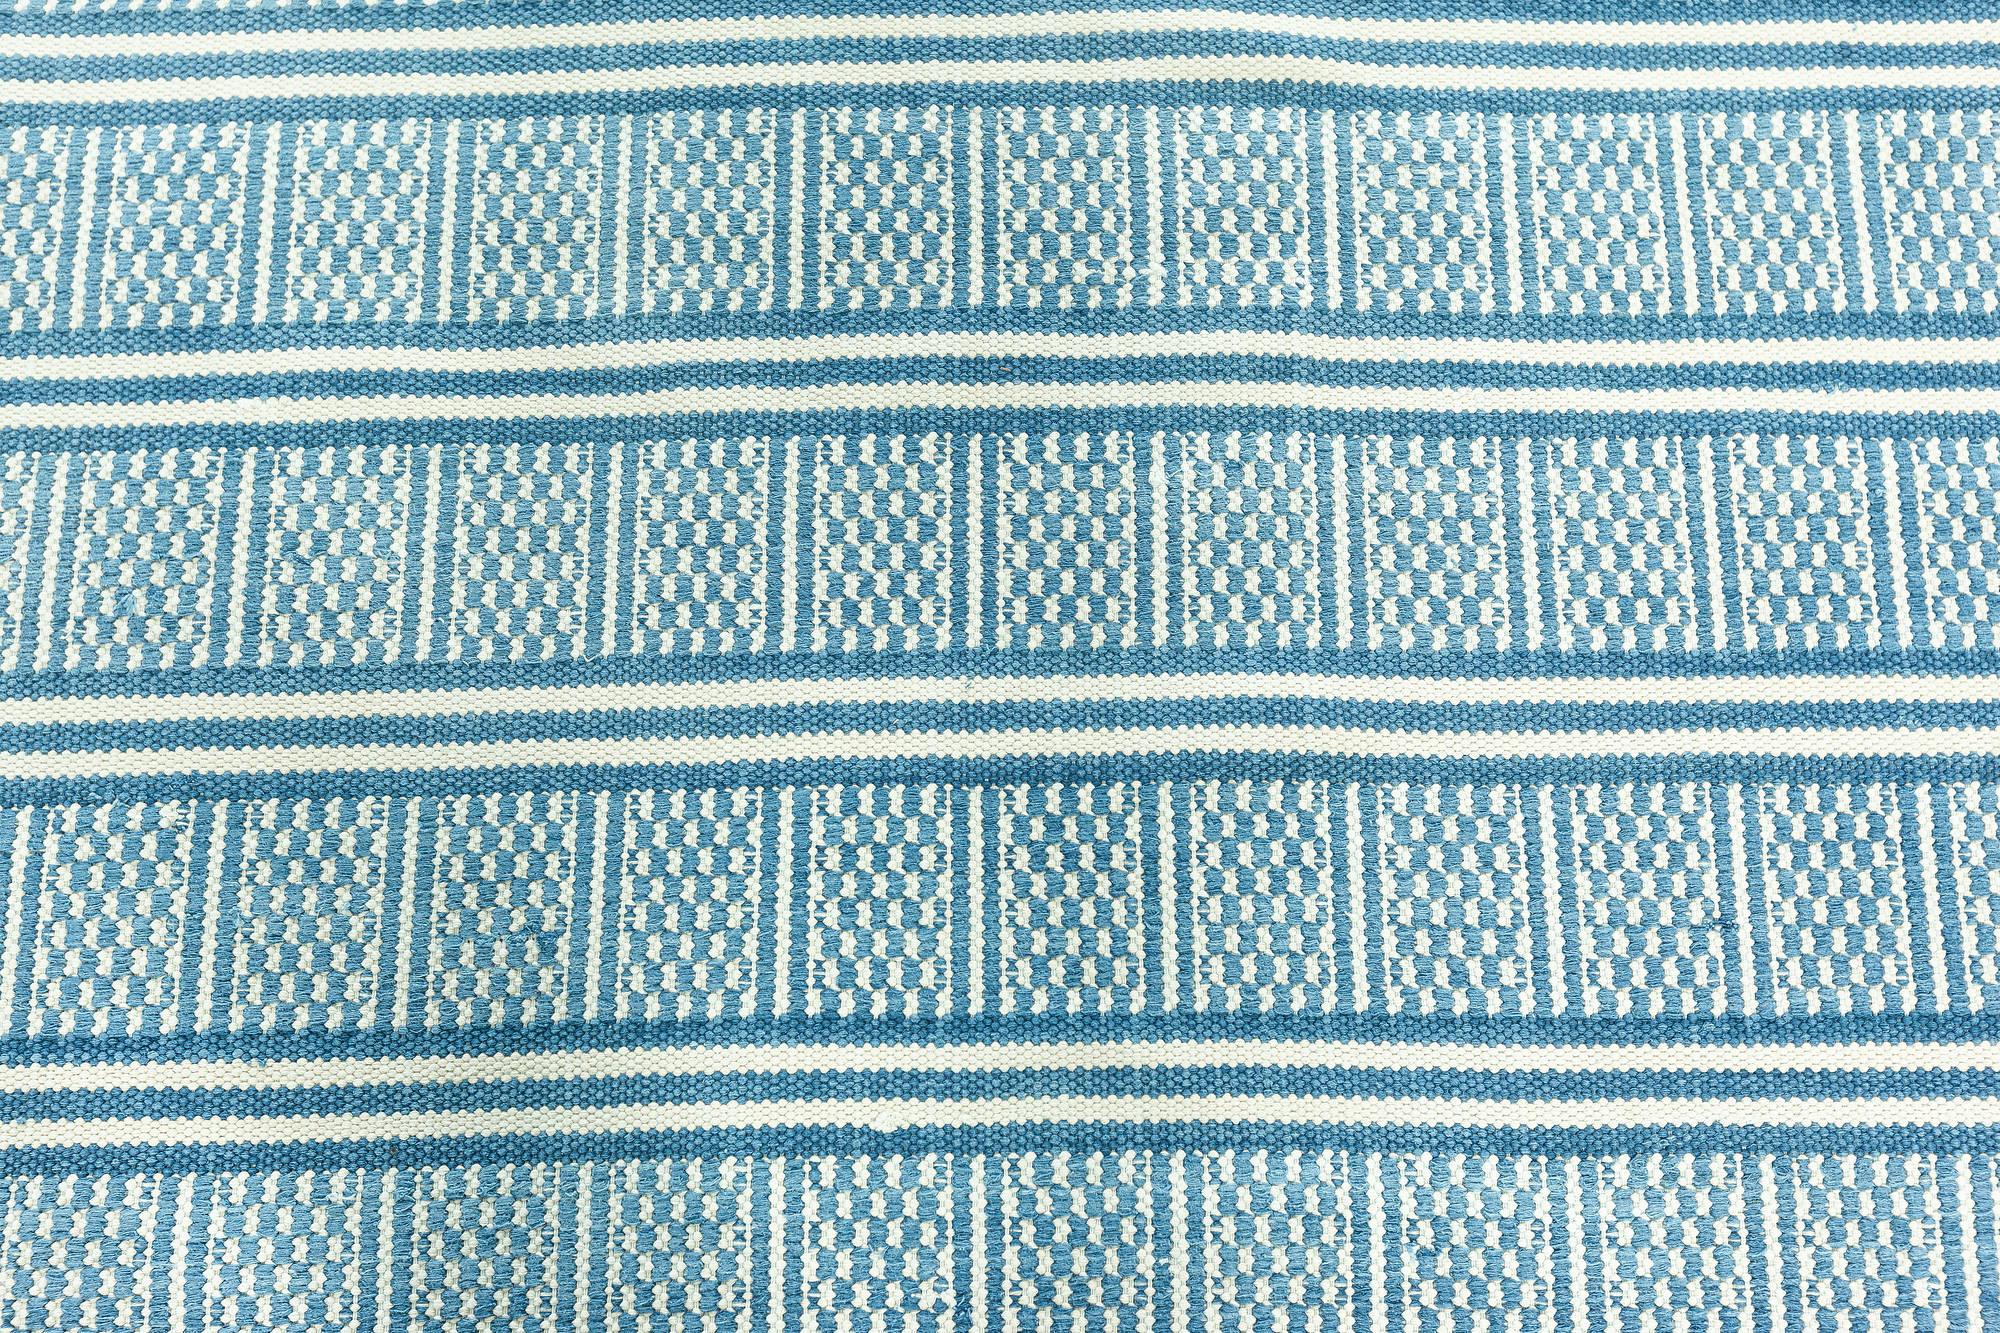 Large Traditional style modern blue Dhurrie rug by Doris Leslie Blau
Size: 11'6